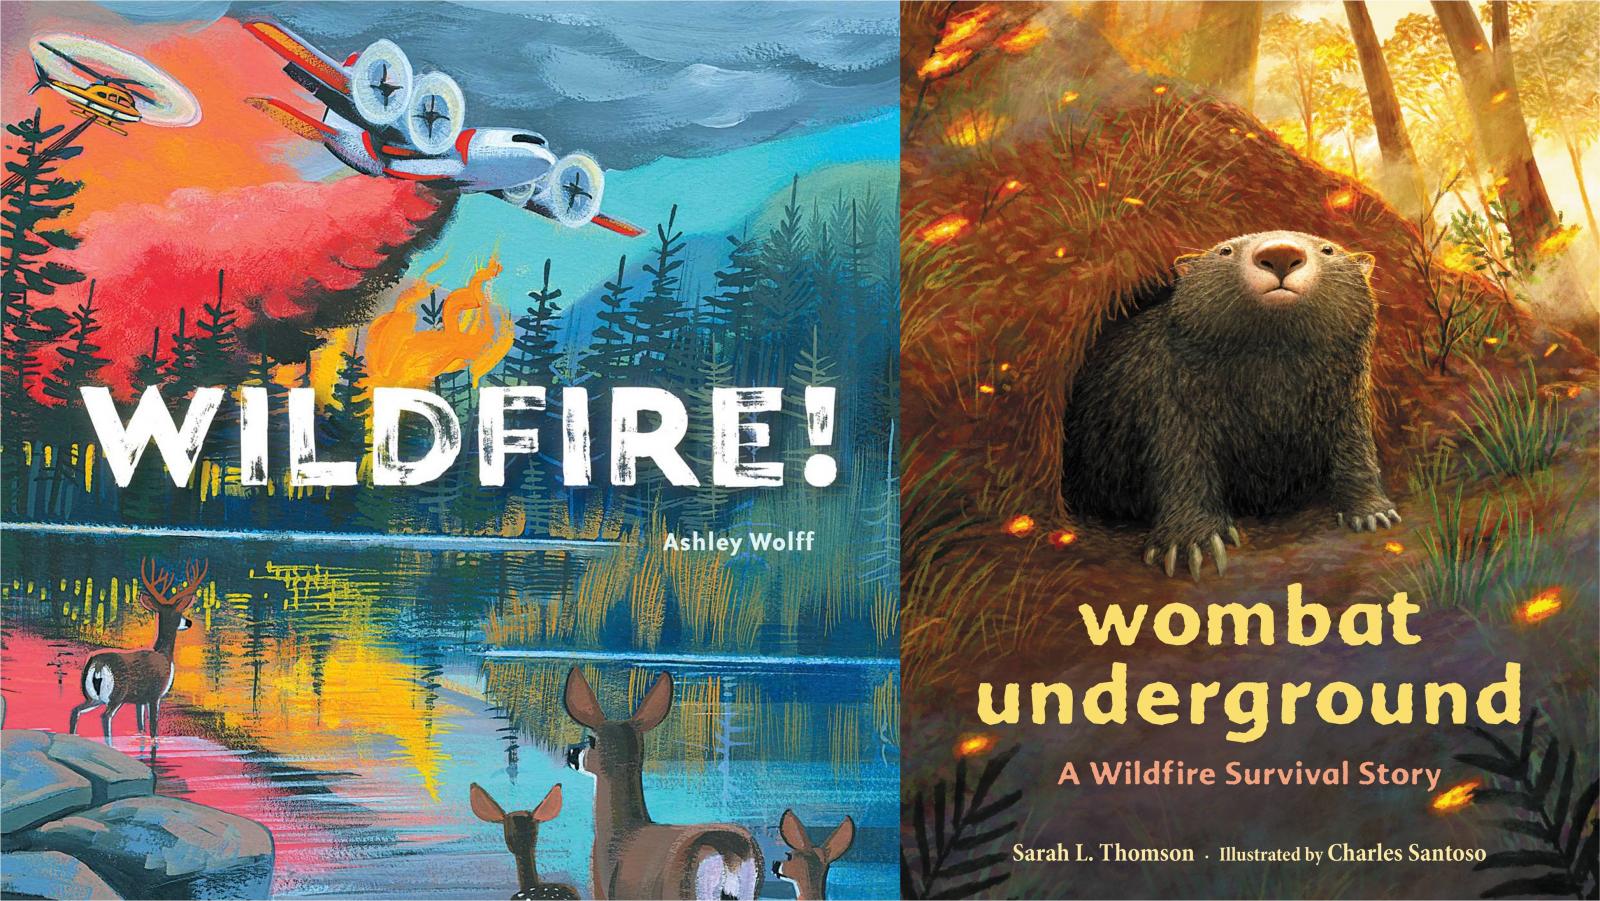 Wildfire! by Ashley Wolff & Wombat Underground by Sarah Thomson